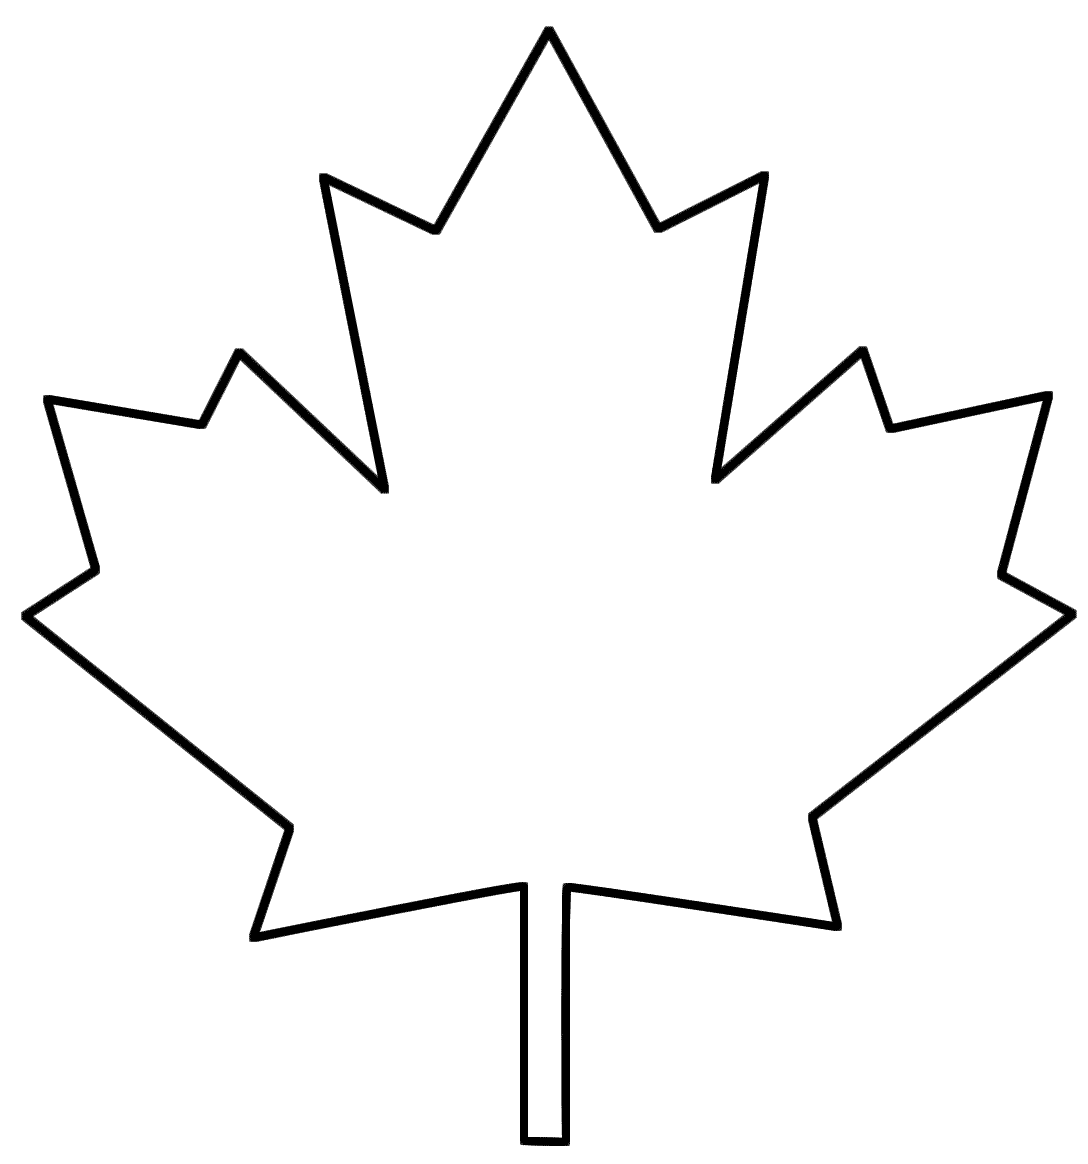 Maple Leaf - Coloring Page (Plants)